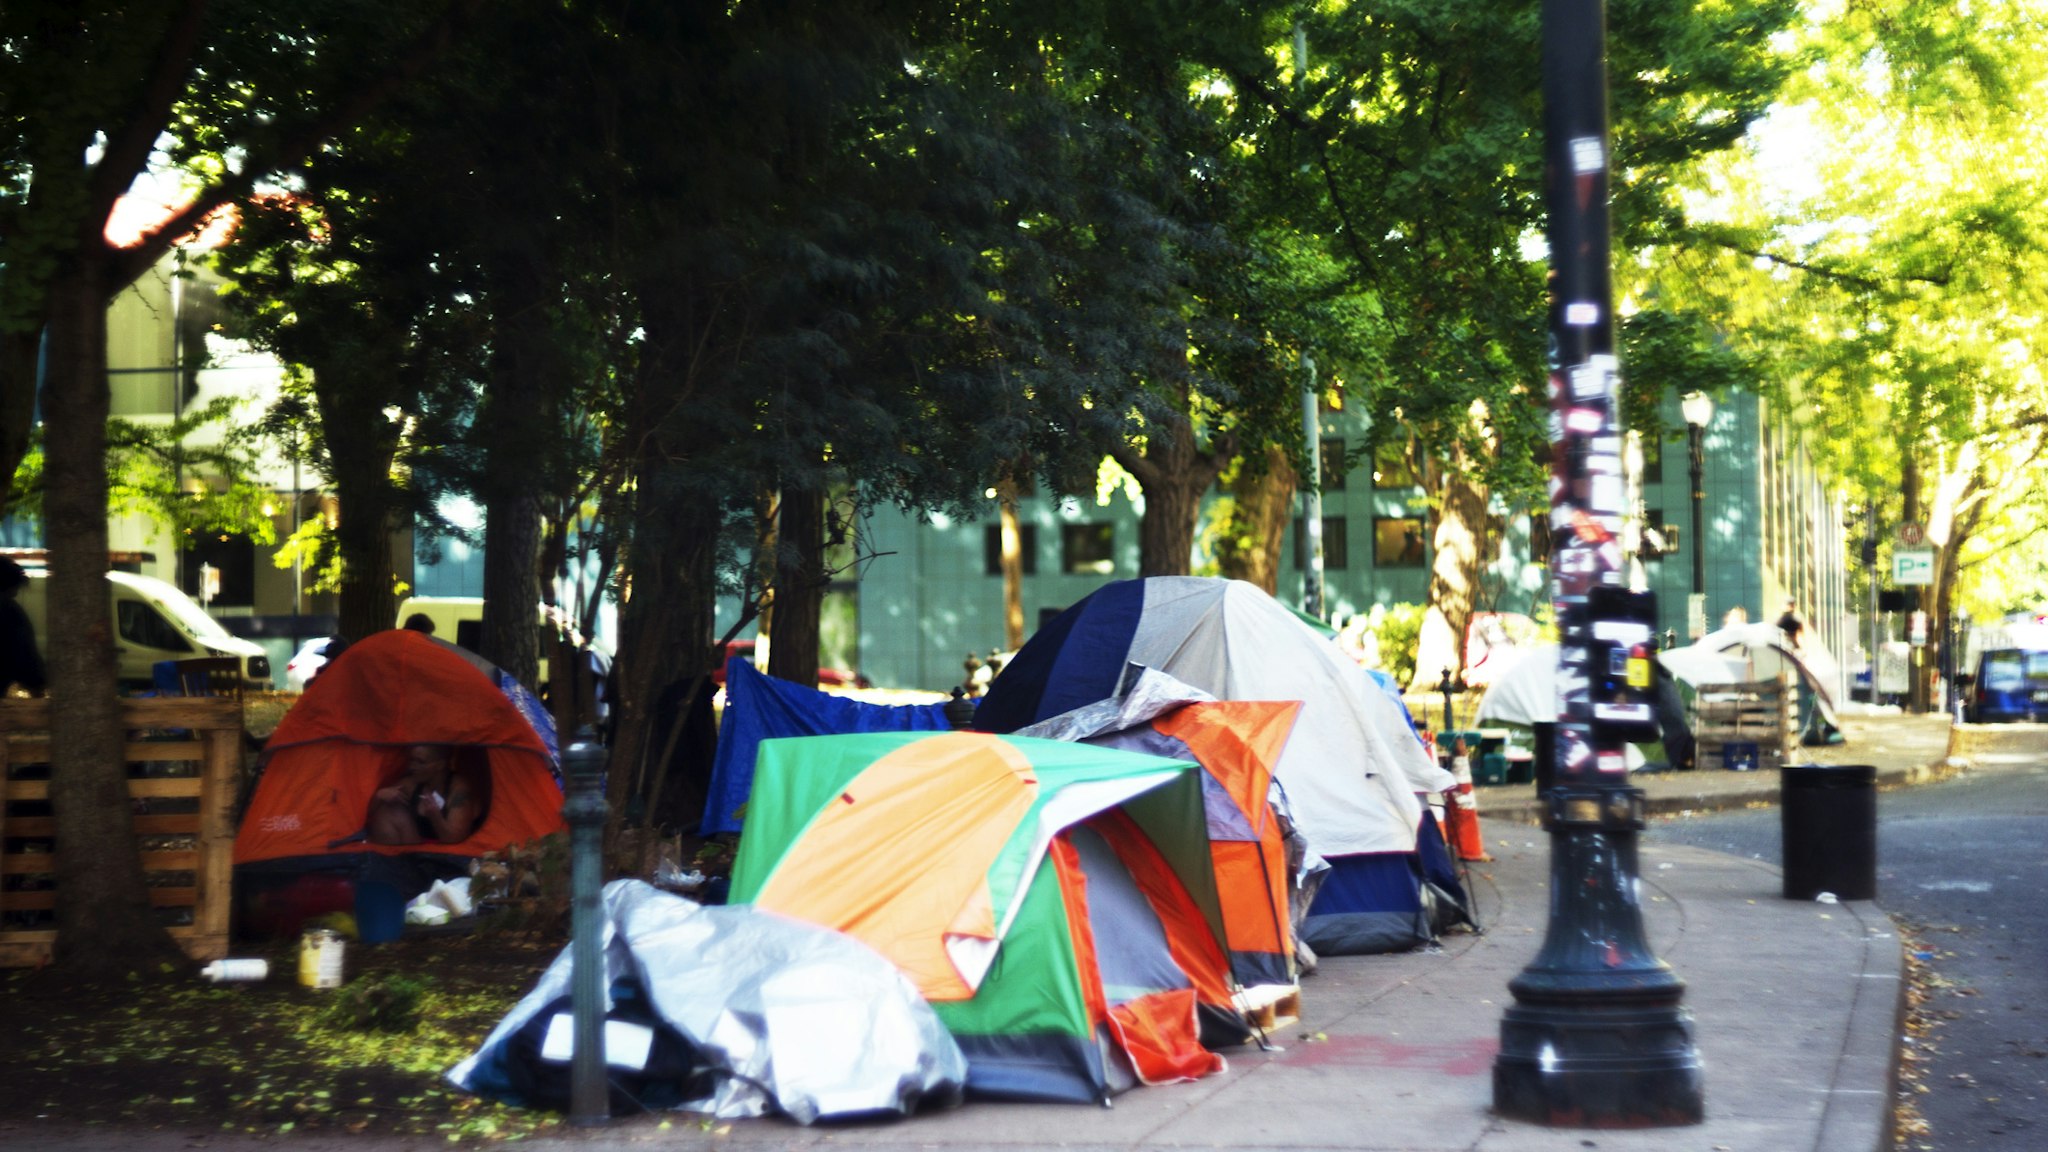 Tents in public — Portland, Oregon